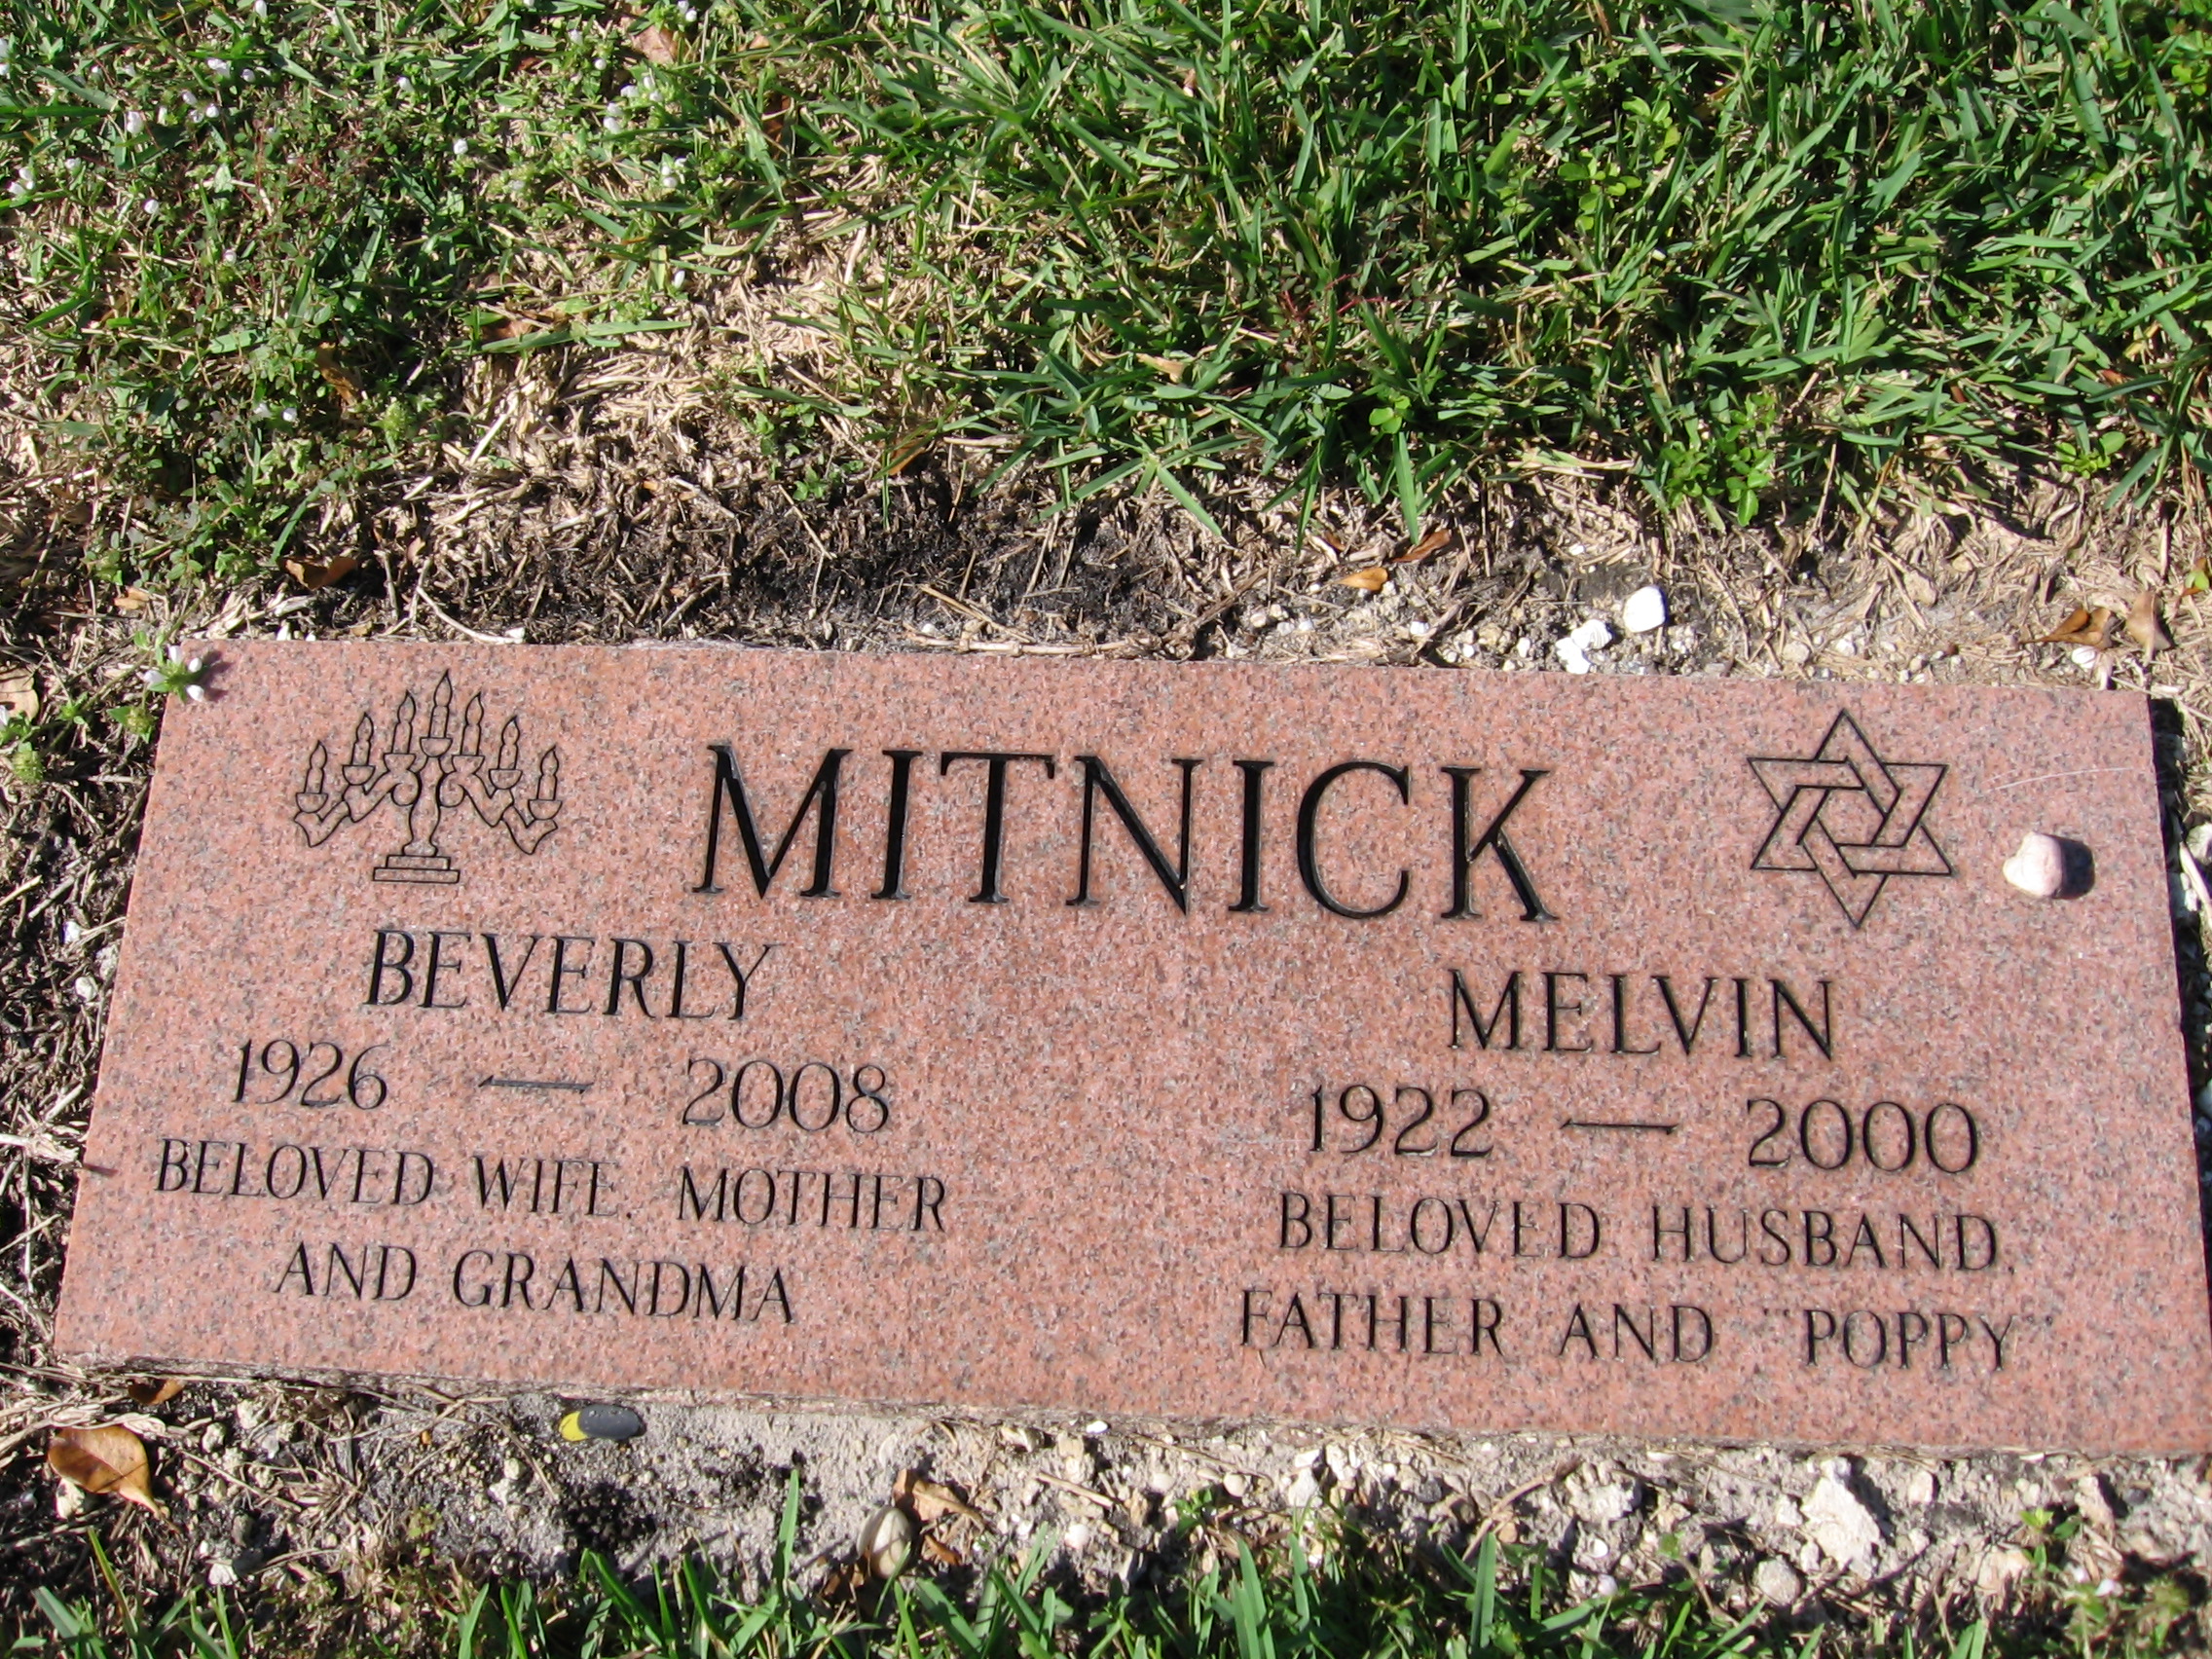 Beverly Mitnick